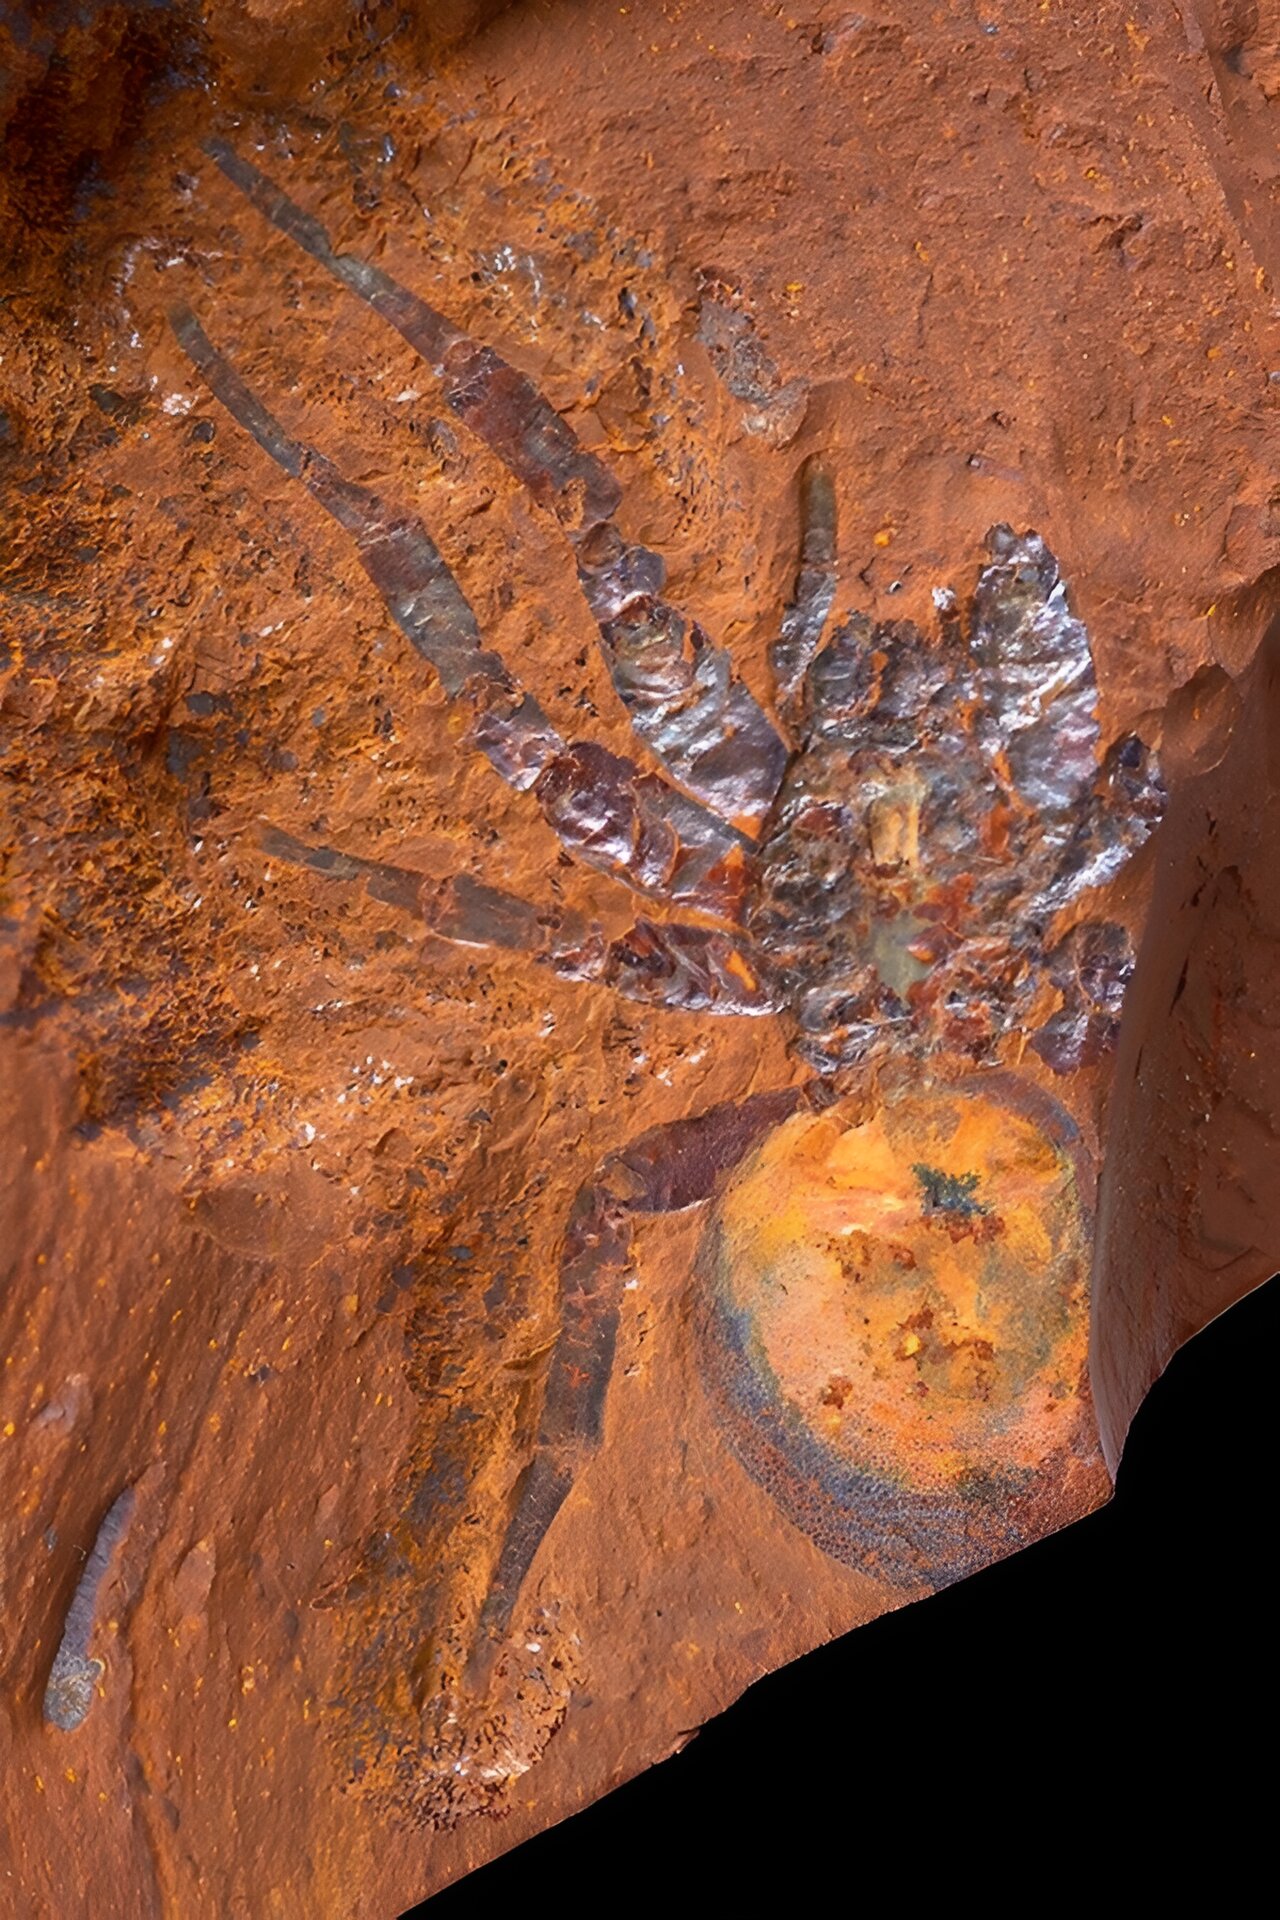 Large fossil spider found in Australia